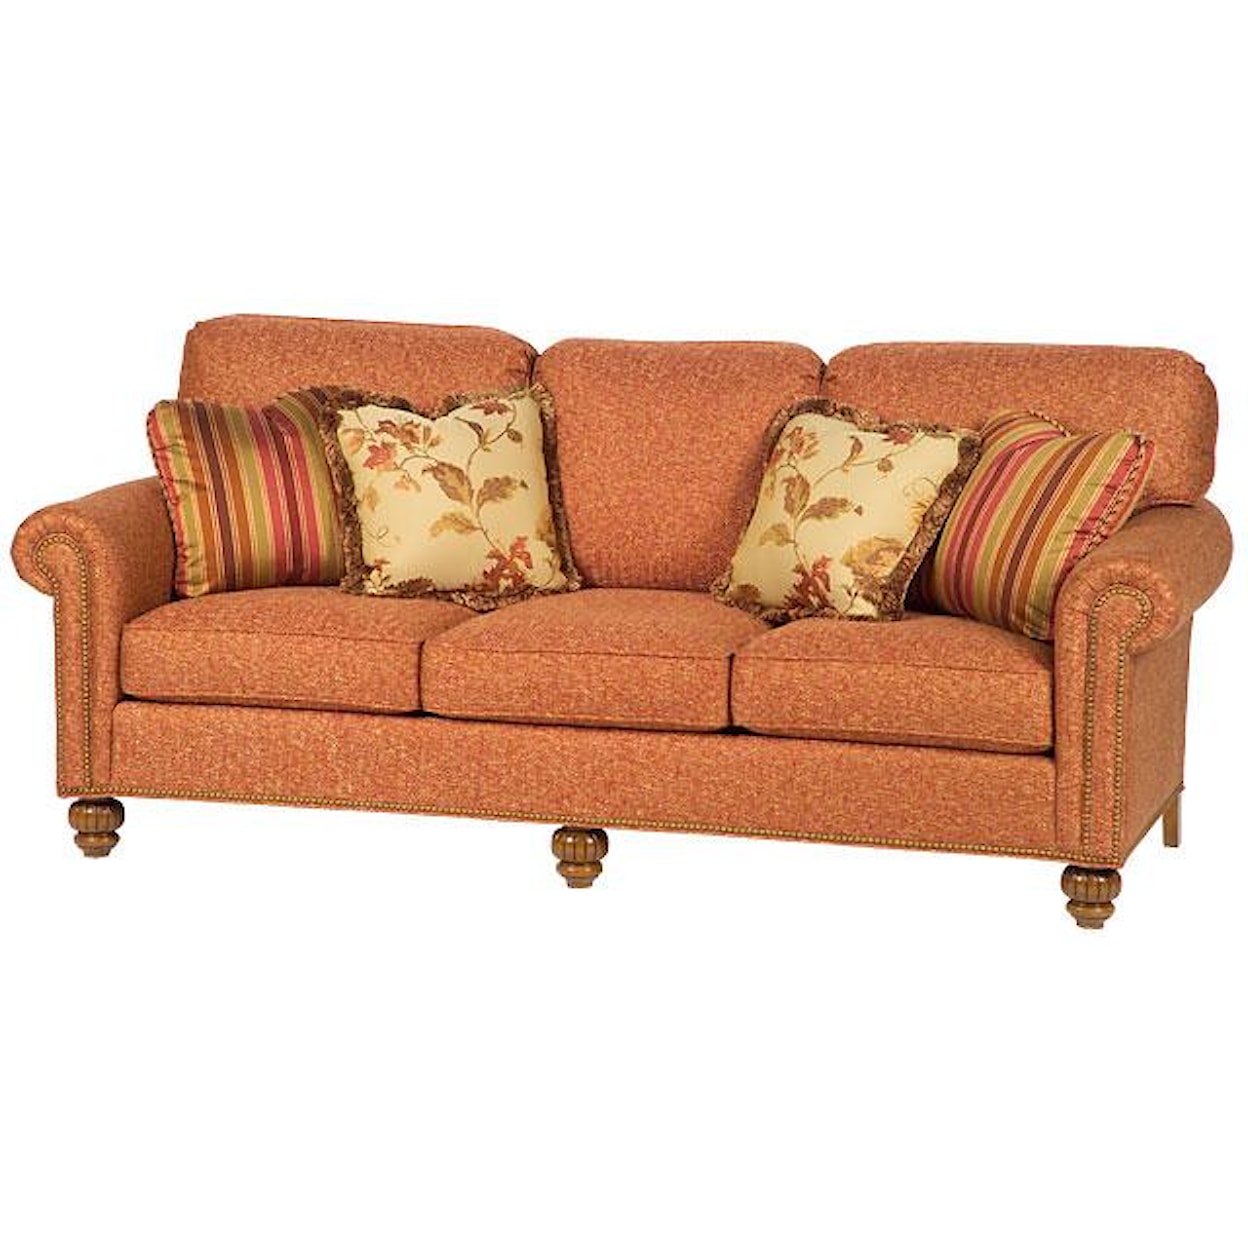 Taylor King Cozy Creations Customizable Sofa